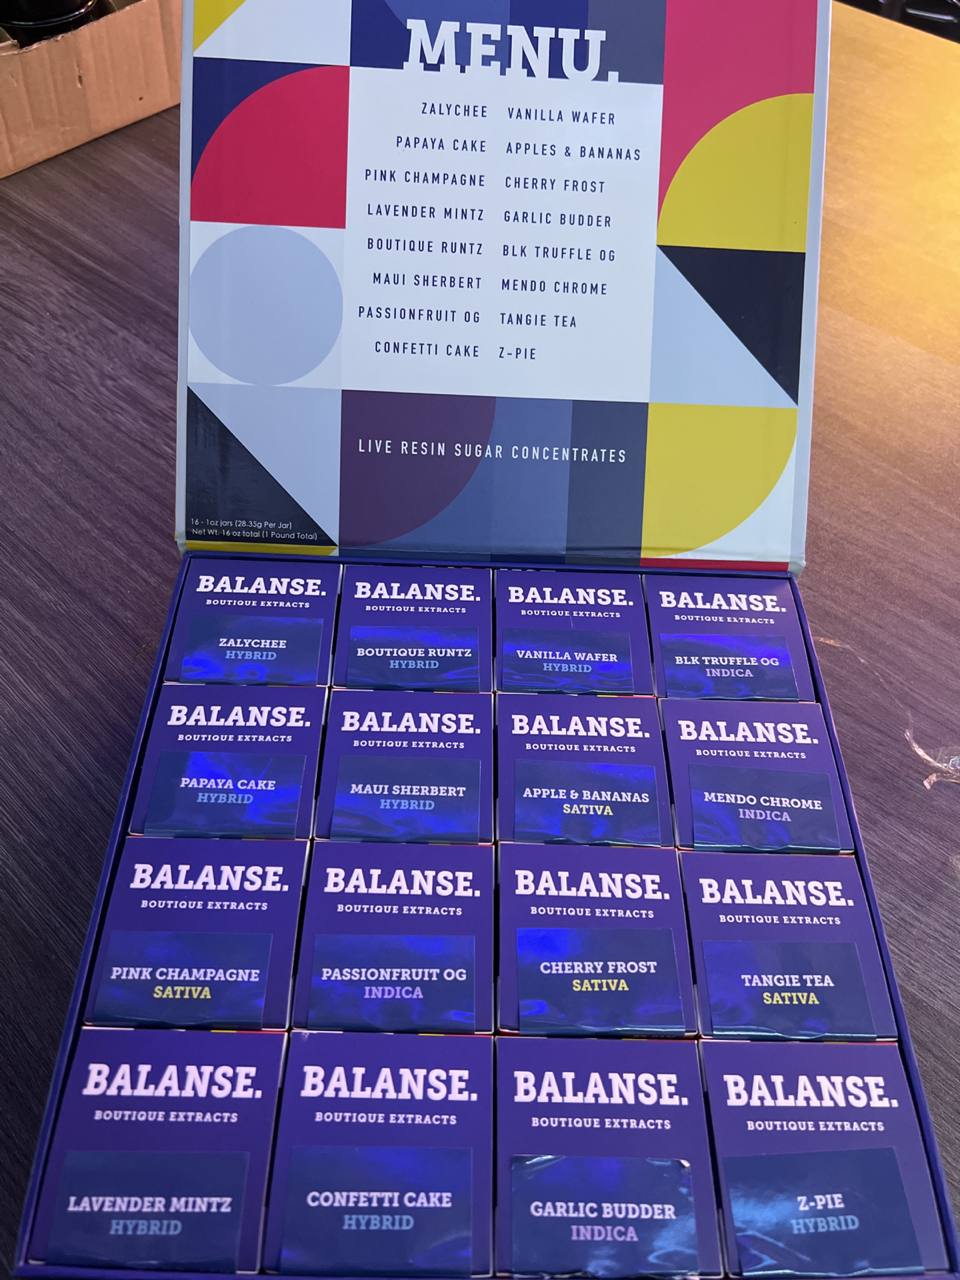 Balanse